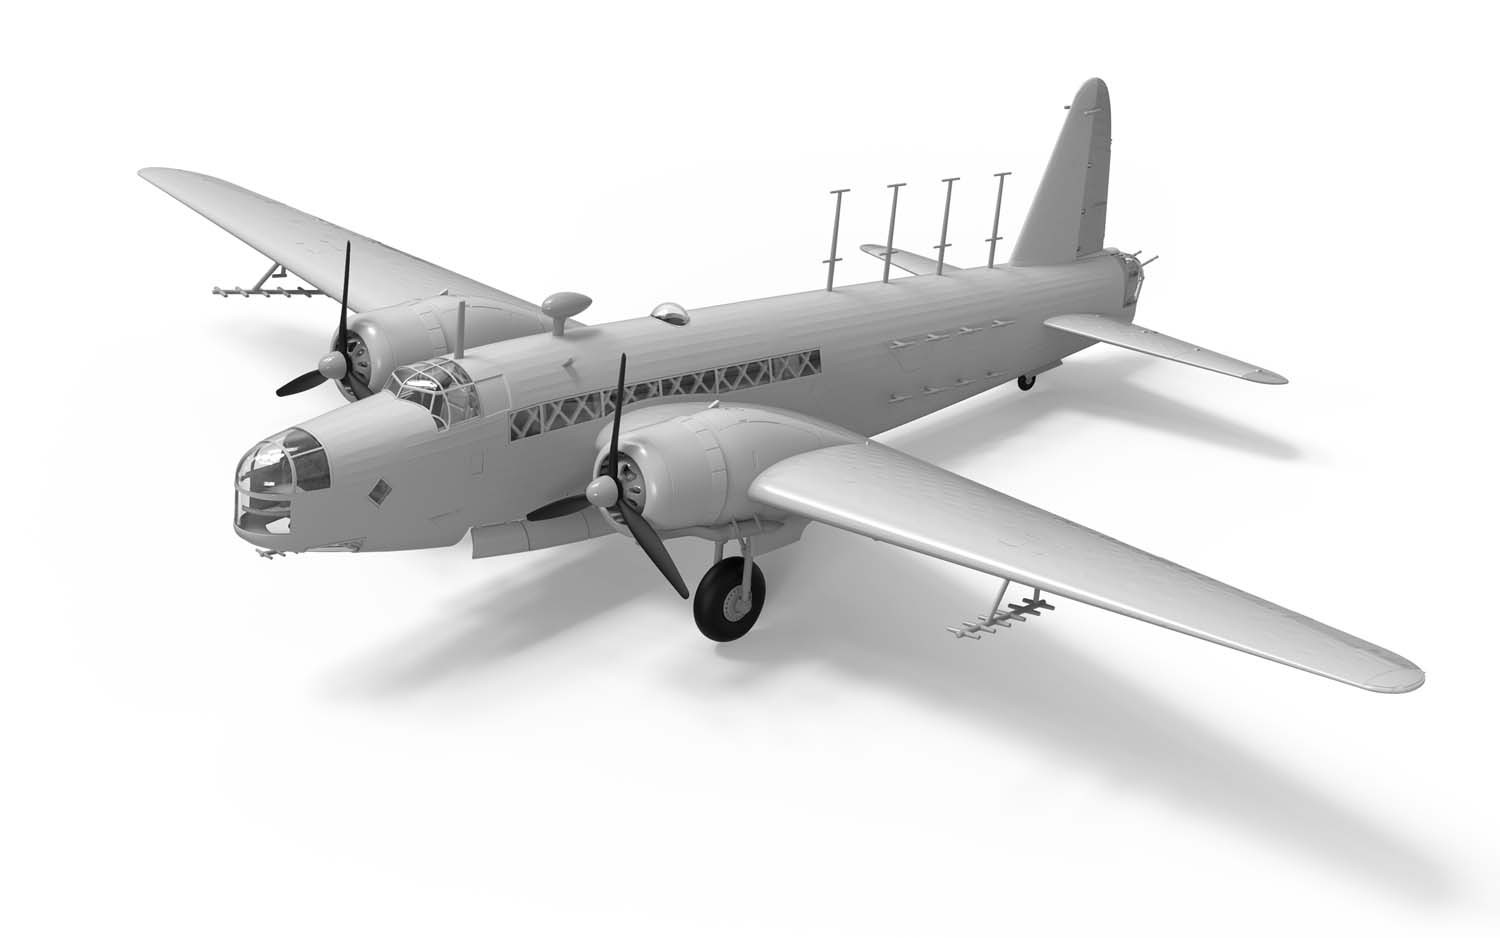 Airfix A08020 VICKERS WELLINGTON GR Mk.VIII